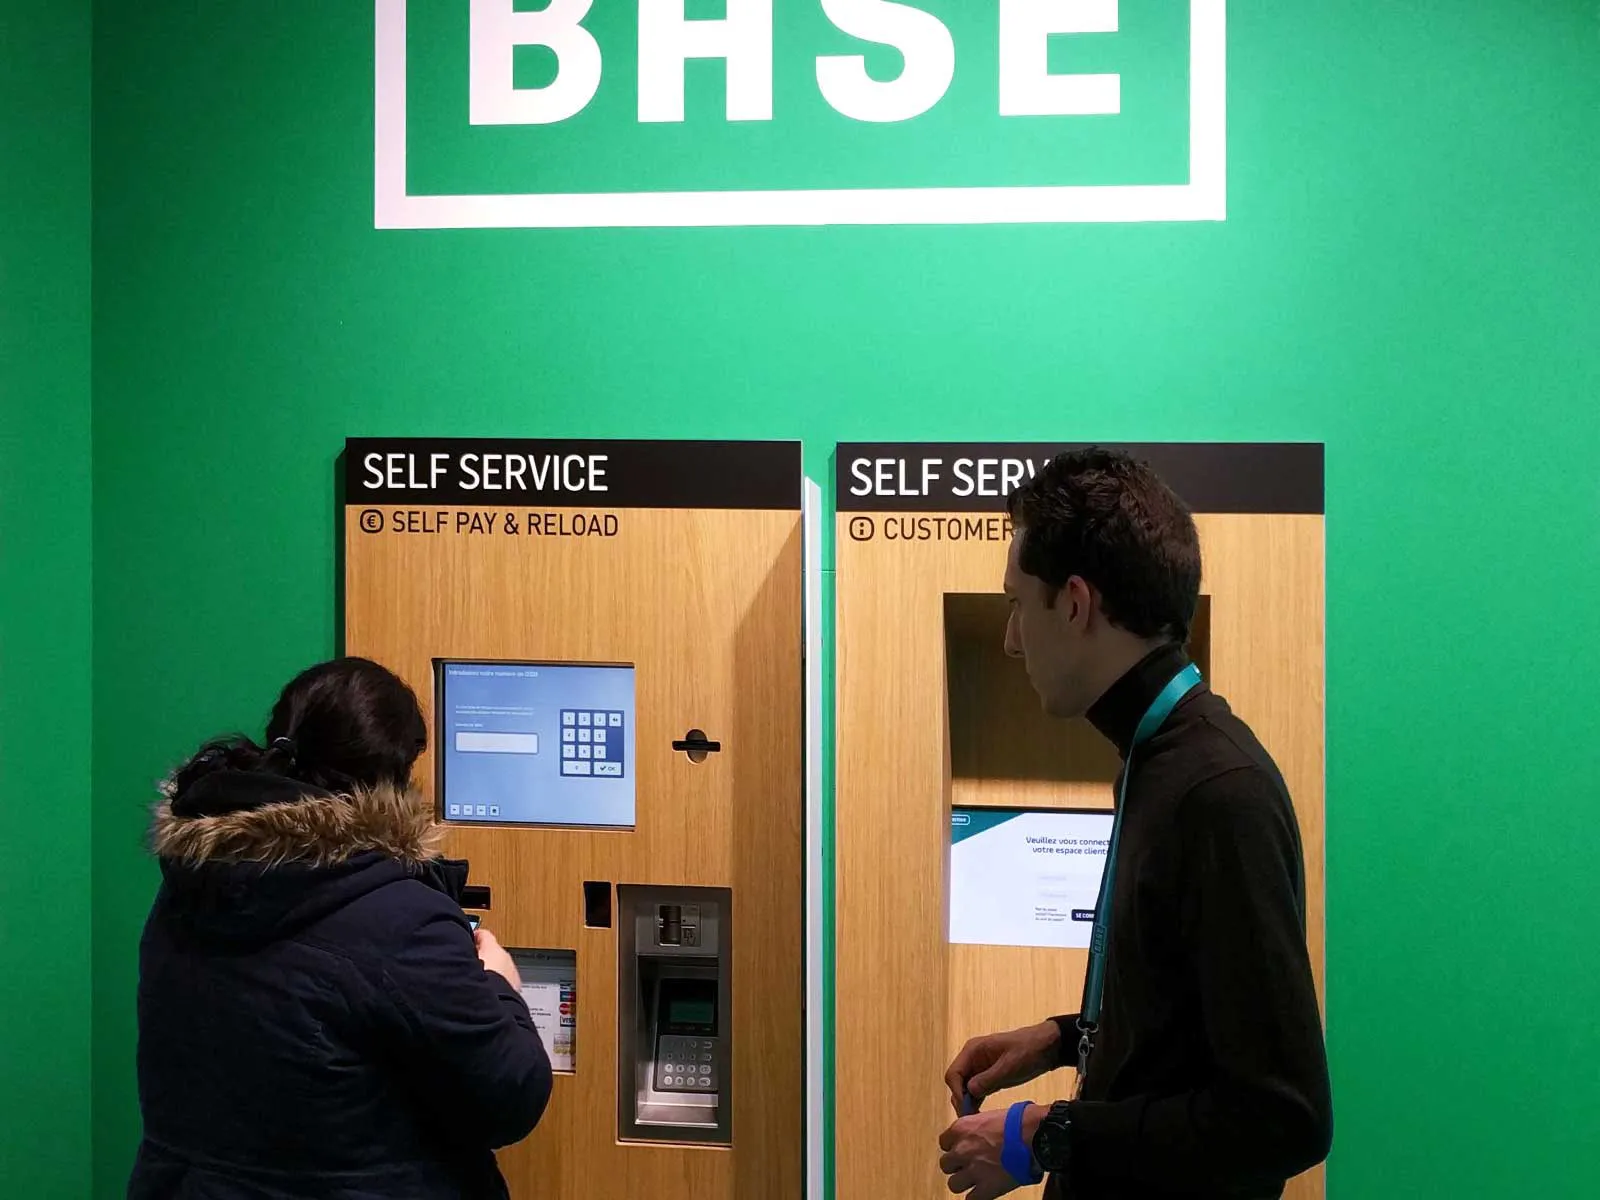 metal bill payment kiosk acceptor in bank